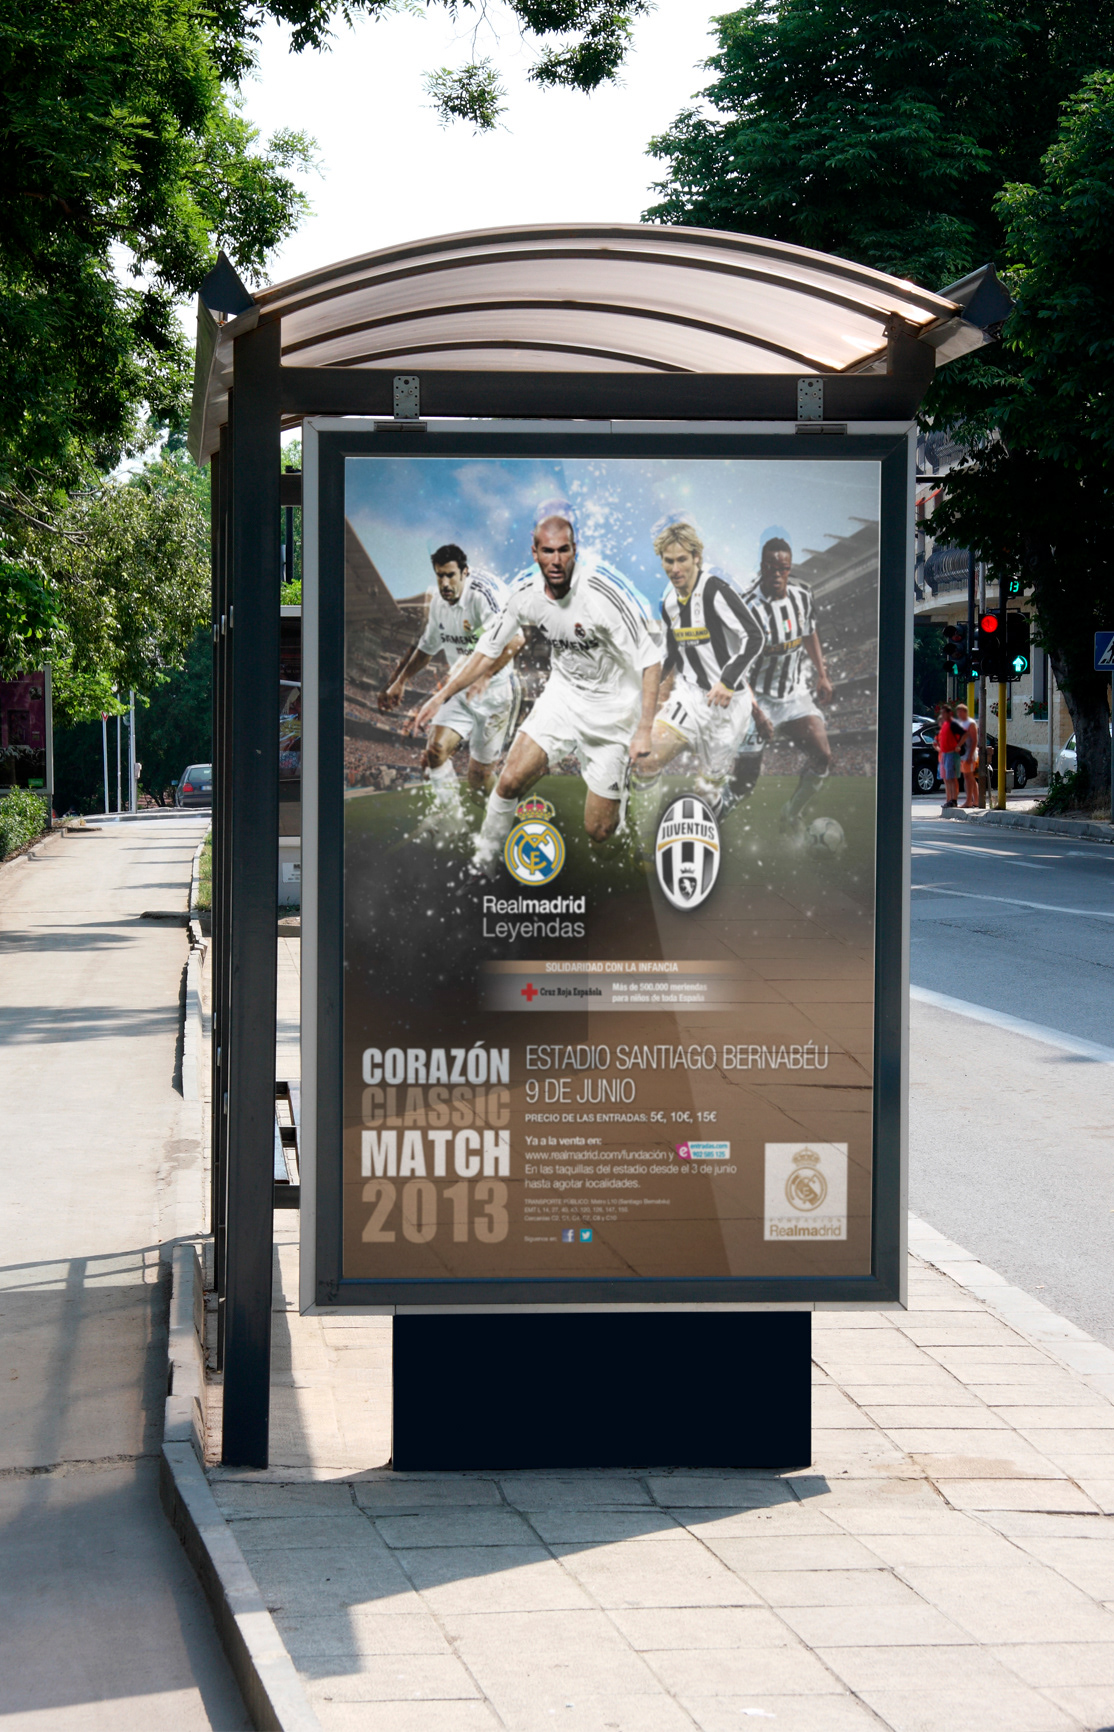 Real Madrid Juventus Zidane figo nedved davids soccer football sport Corazon classic match charity